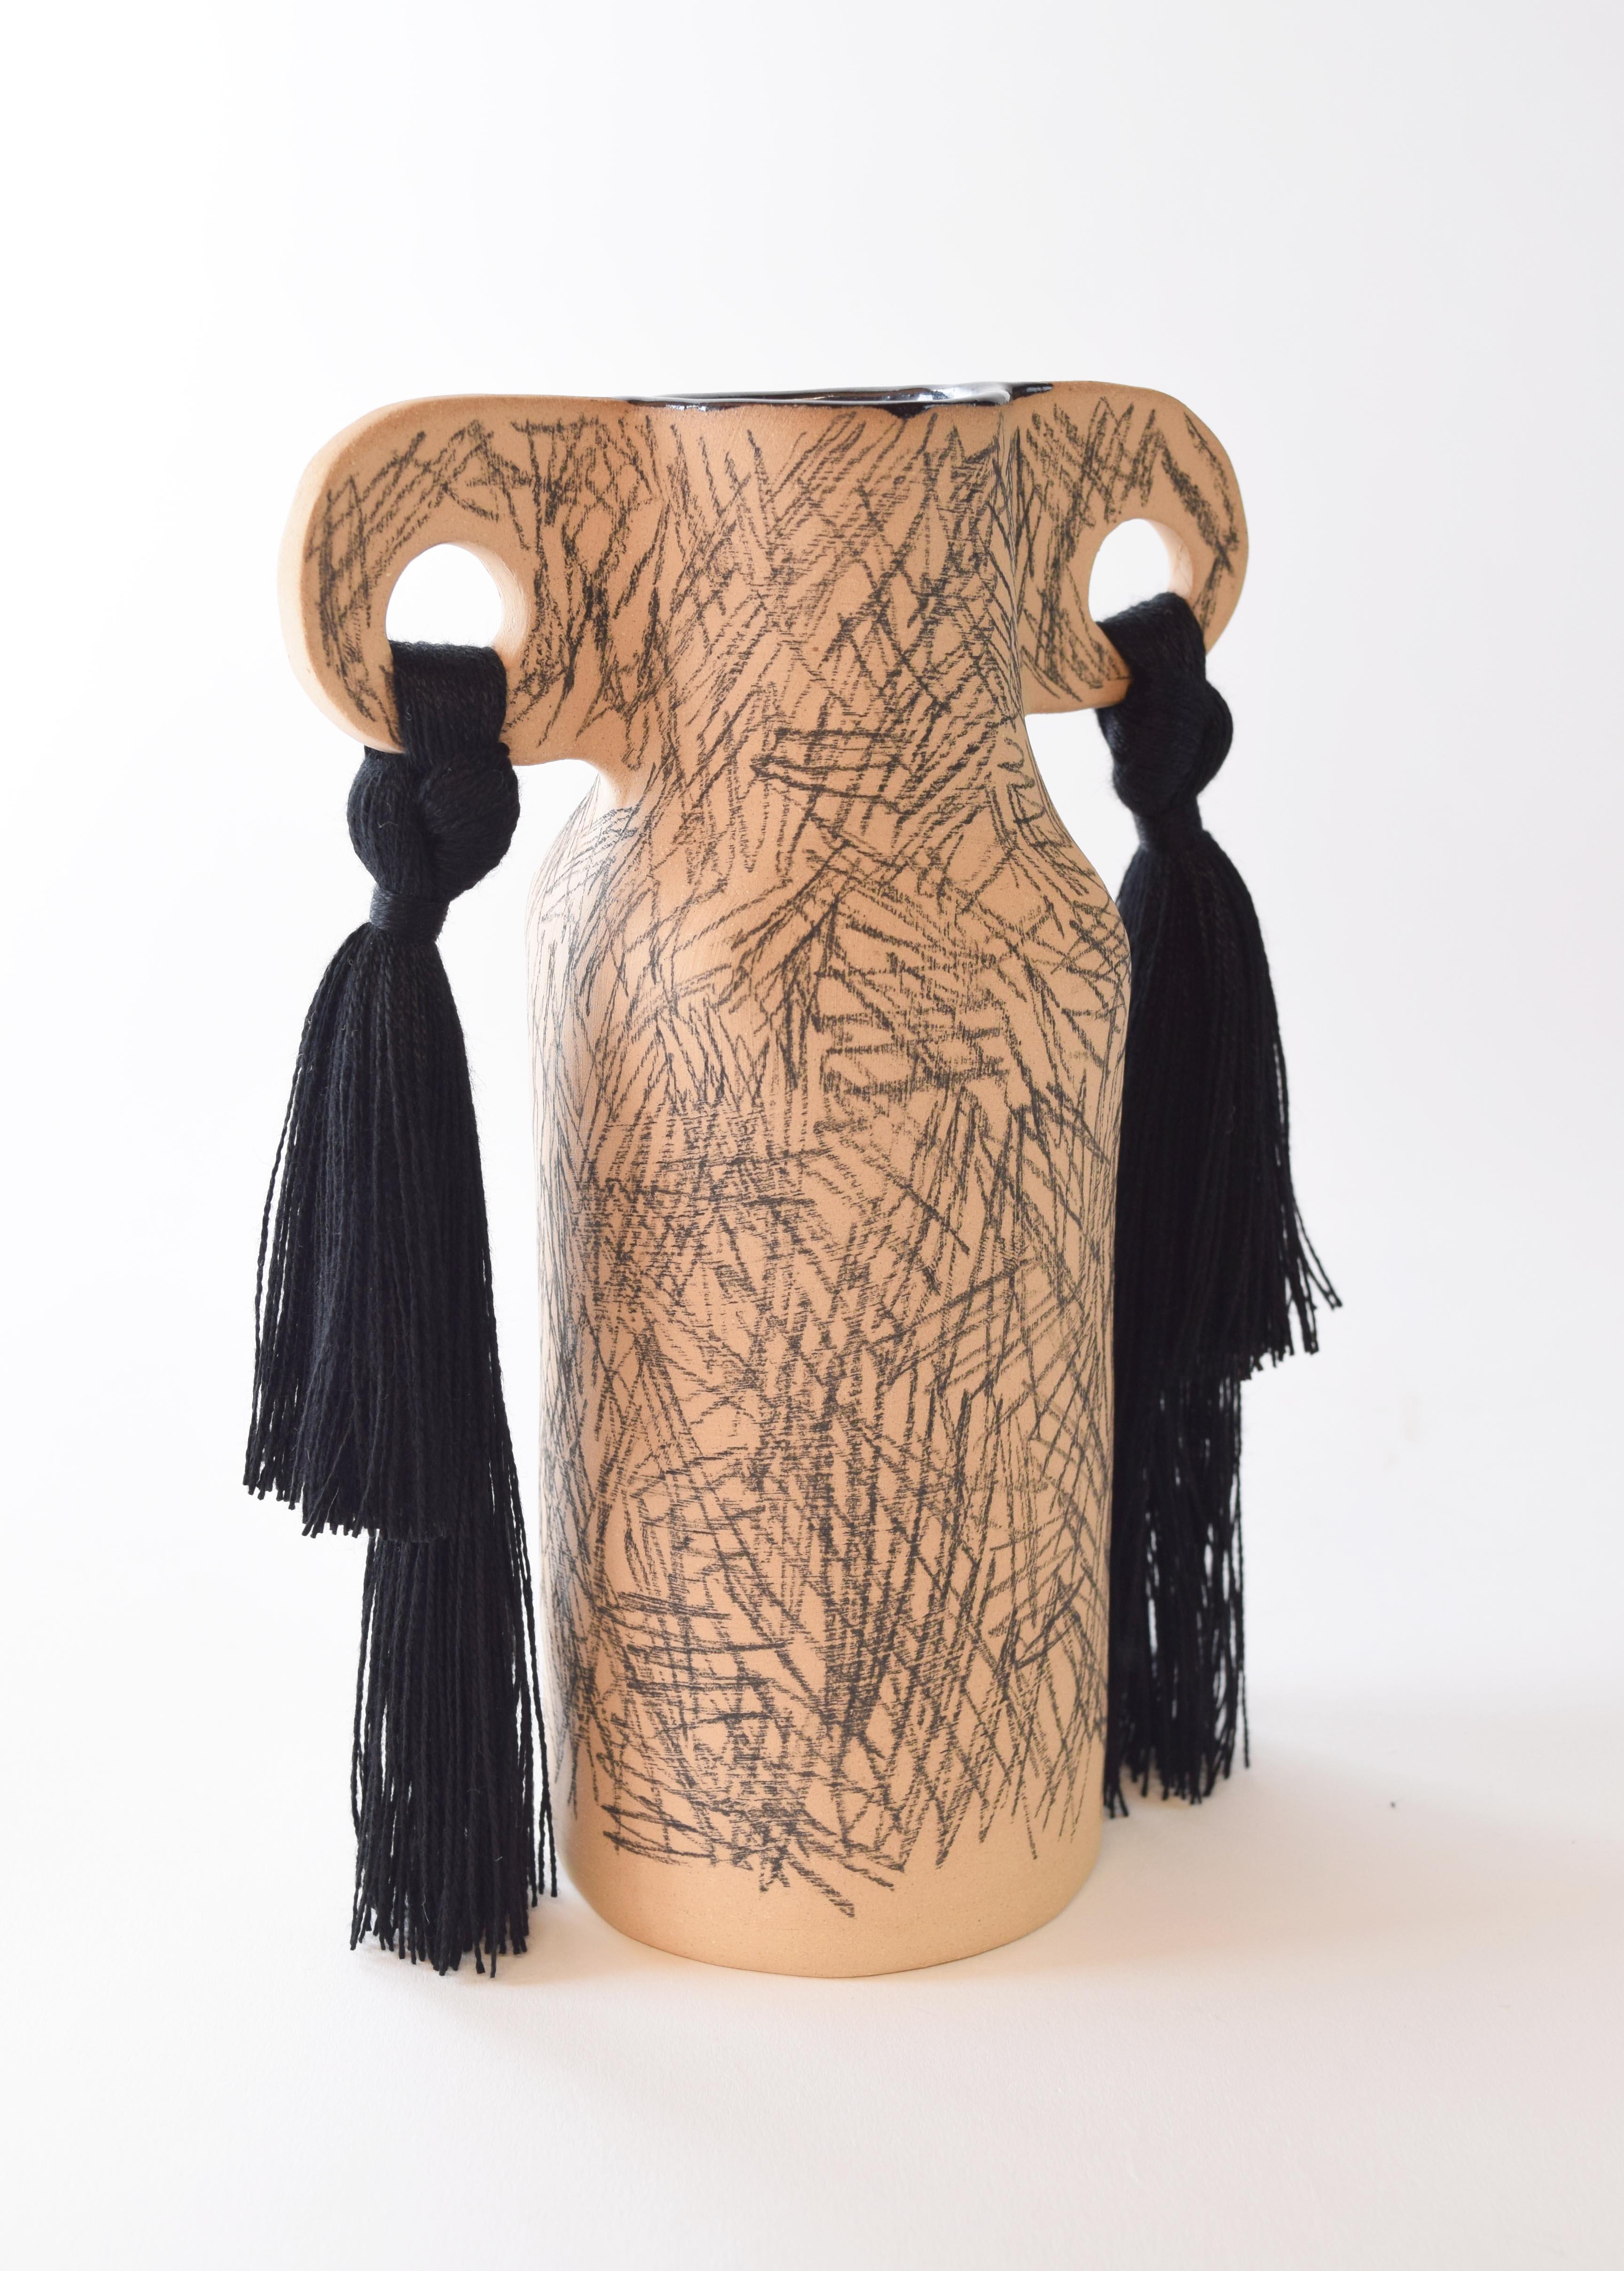 Hand-Crafted OOAK Handmade Ceramic Vase #606 - Hand Drawn Black Underglaze & Tencel Fringe